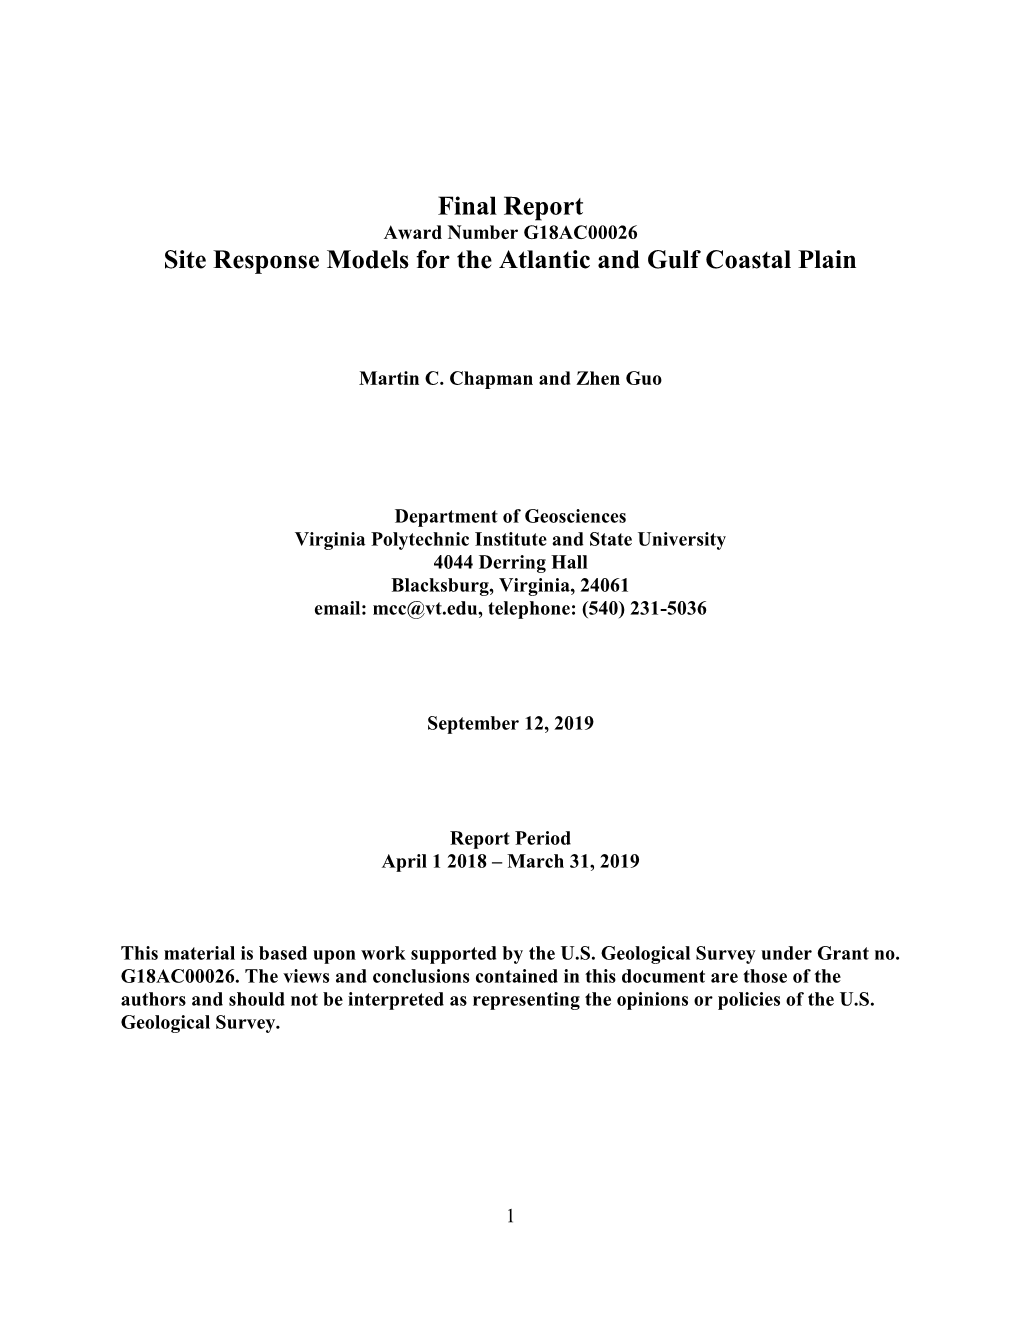 Final Report Site Response Models